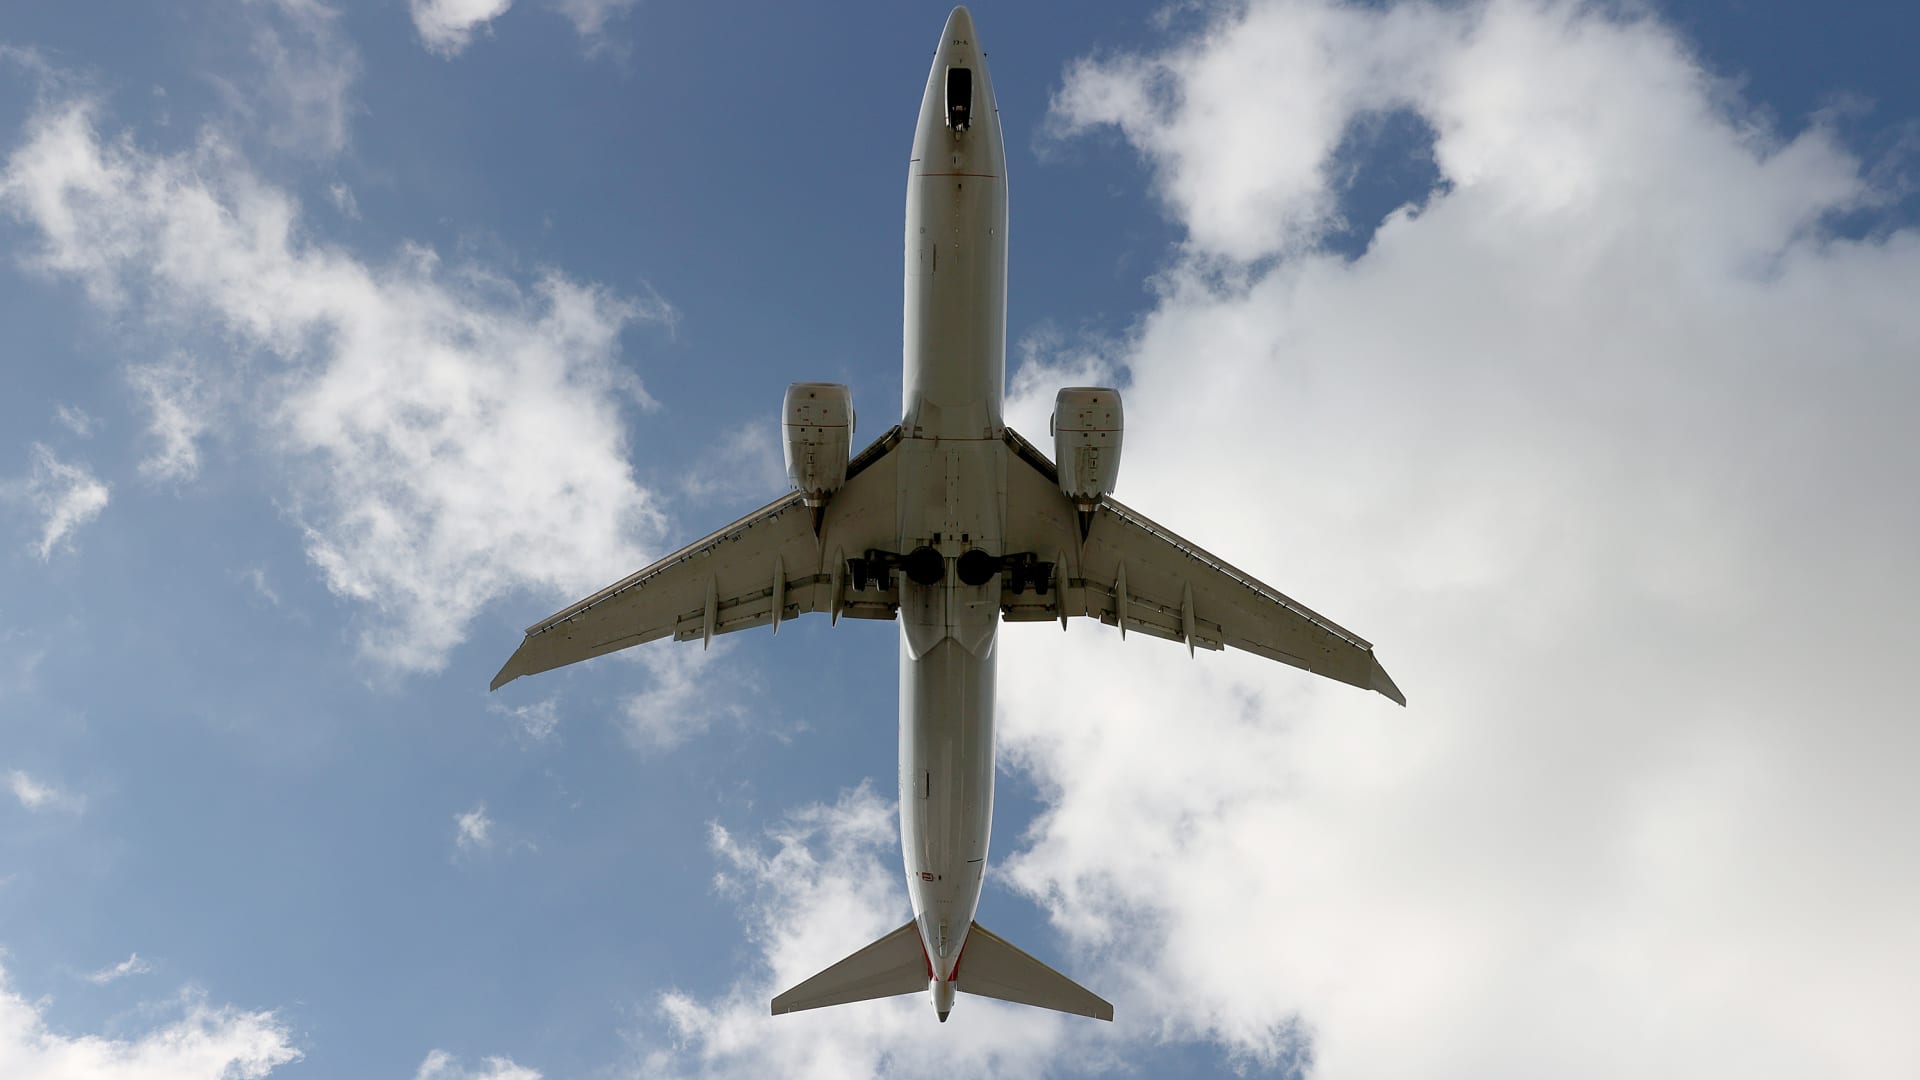 U.S. approves Boeing inspection, rework plan to resume 787 deliveries